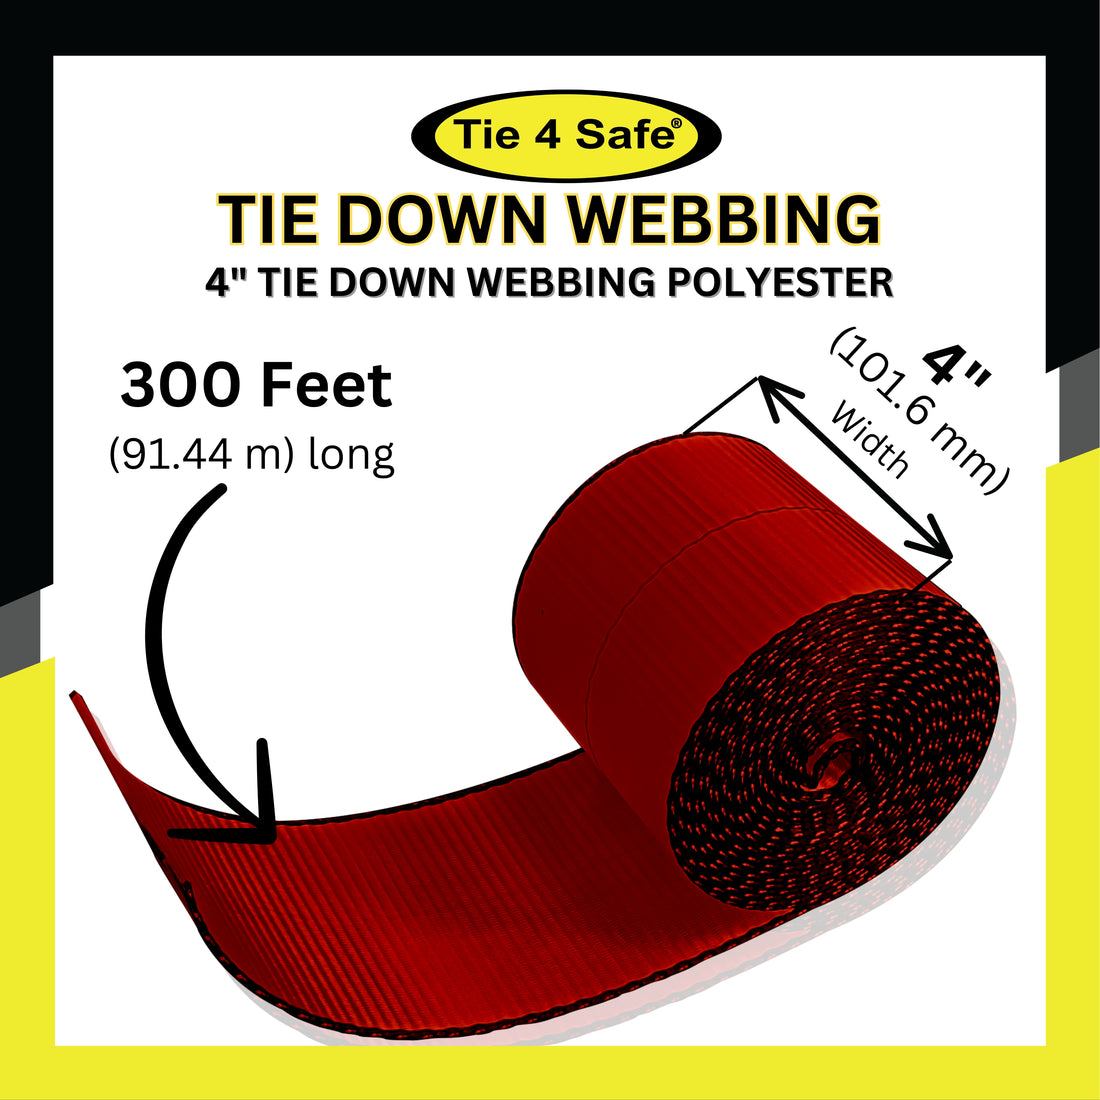 4" Tie Down Webbing Polyester